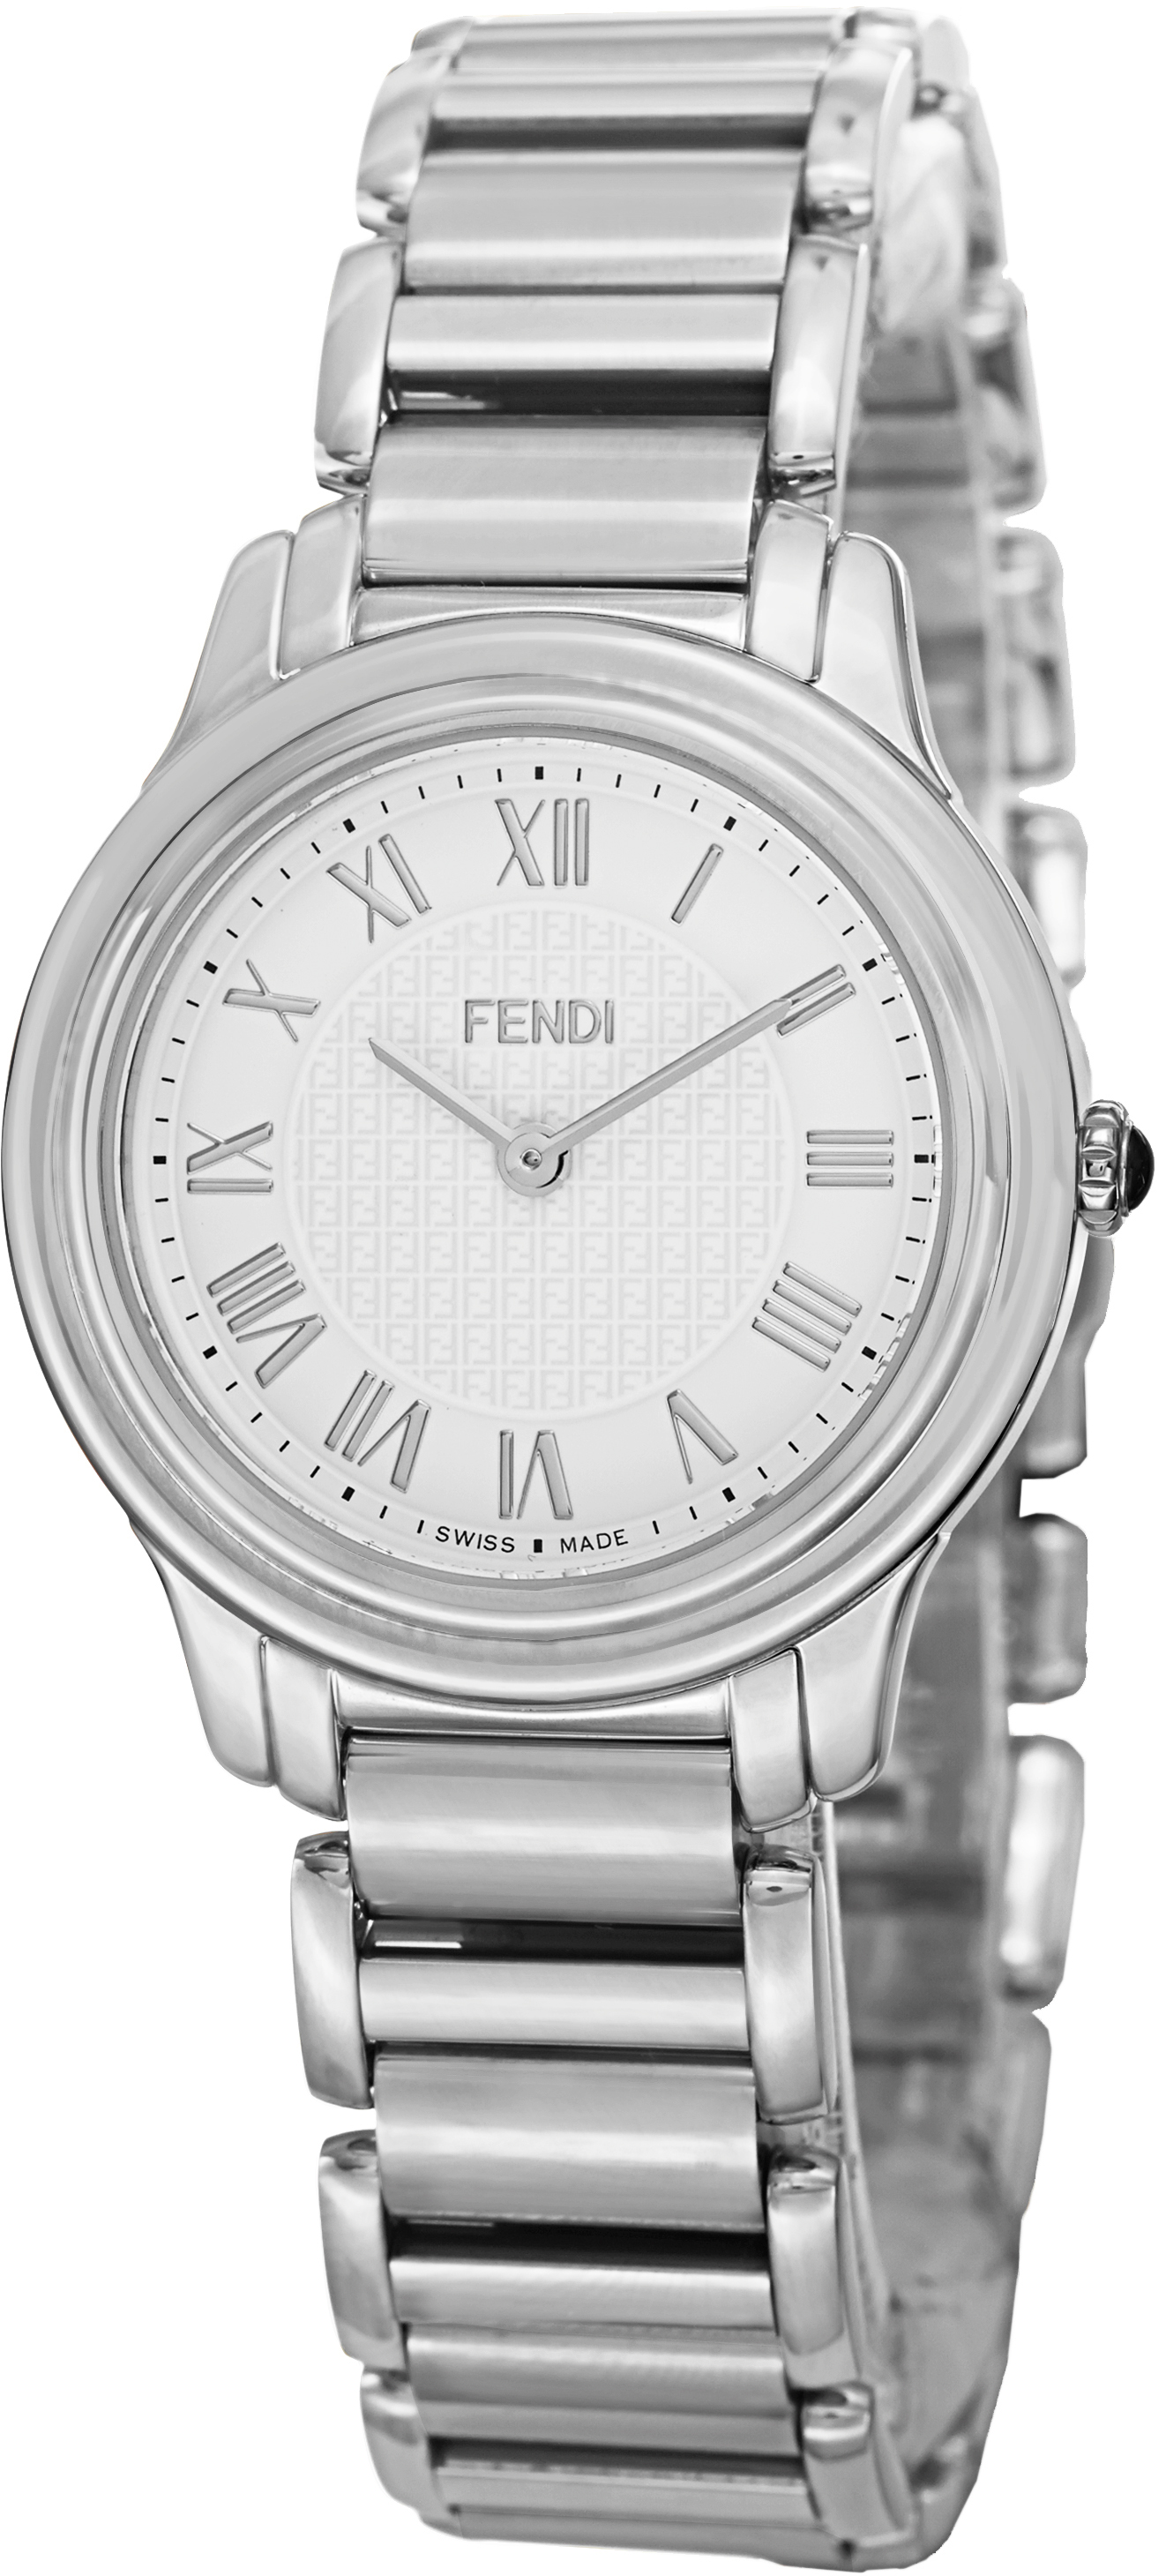 Fendi Classico Watch Flash Sales | website.jkuat.ac.ke